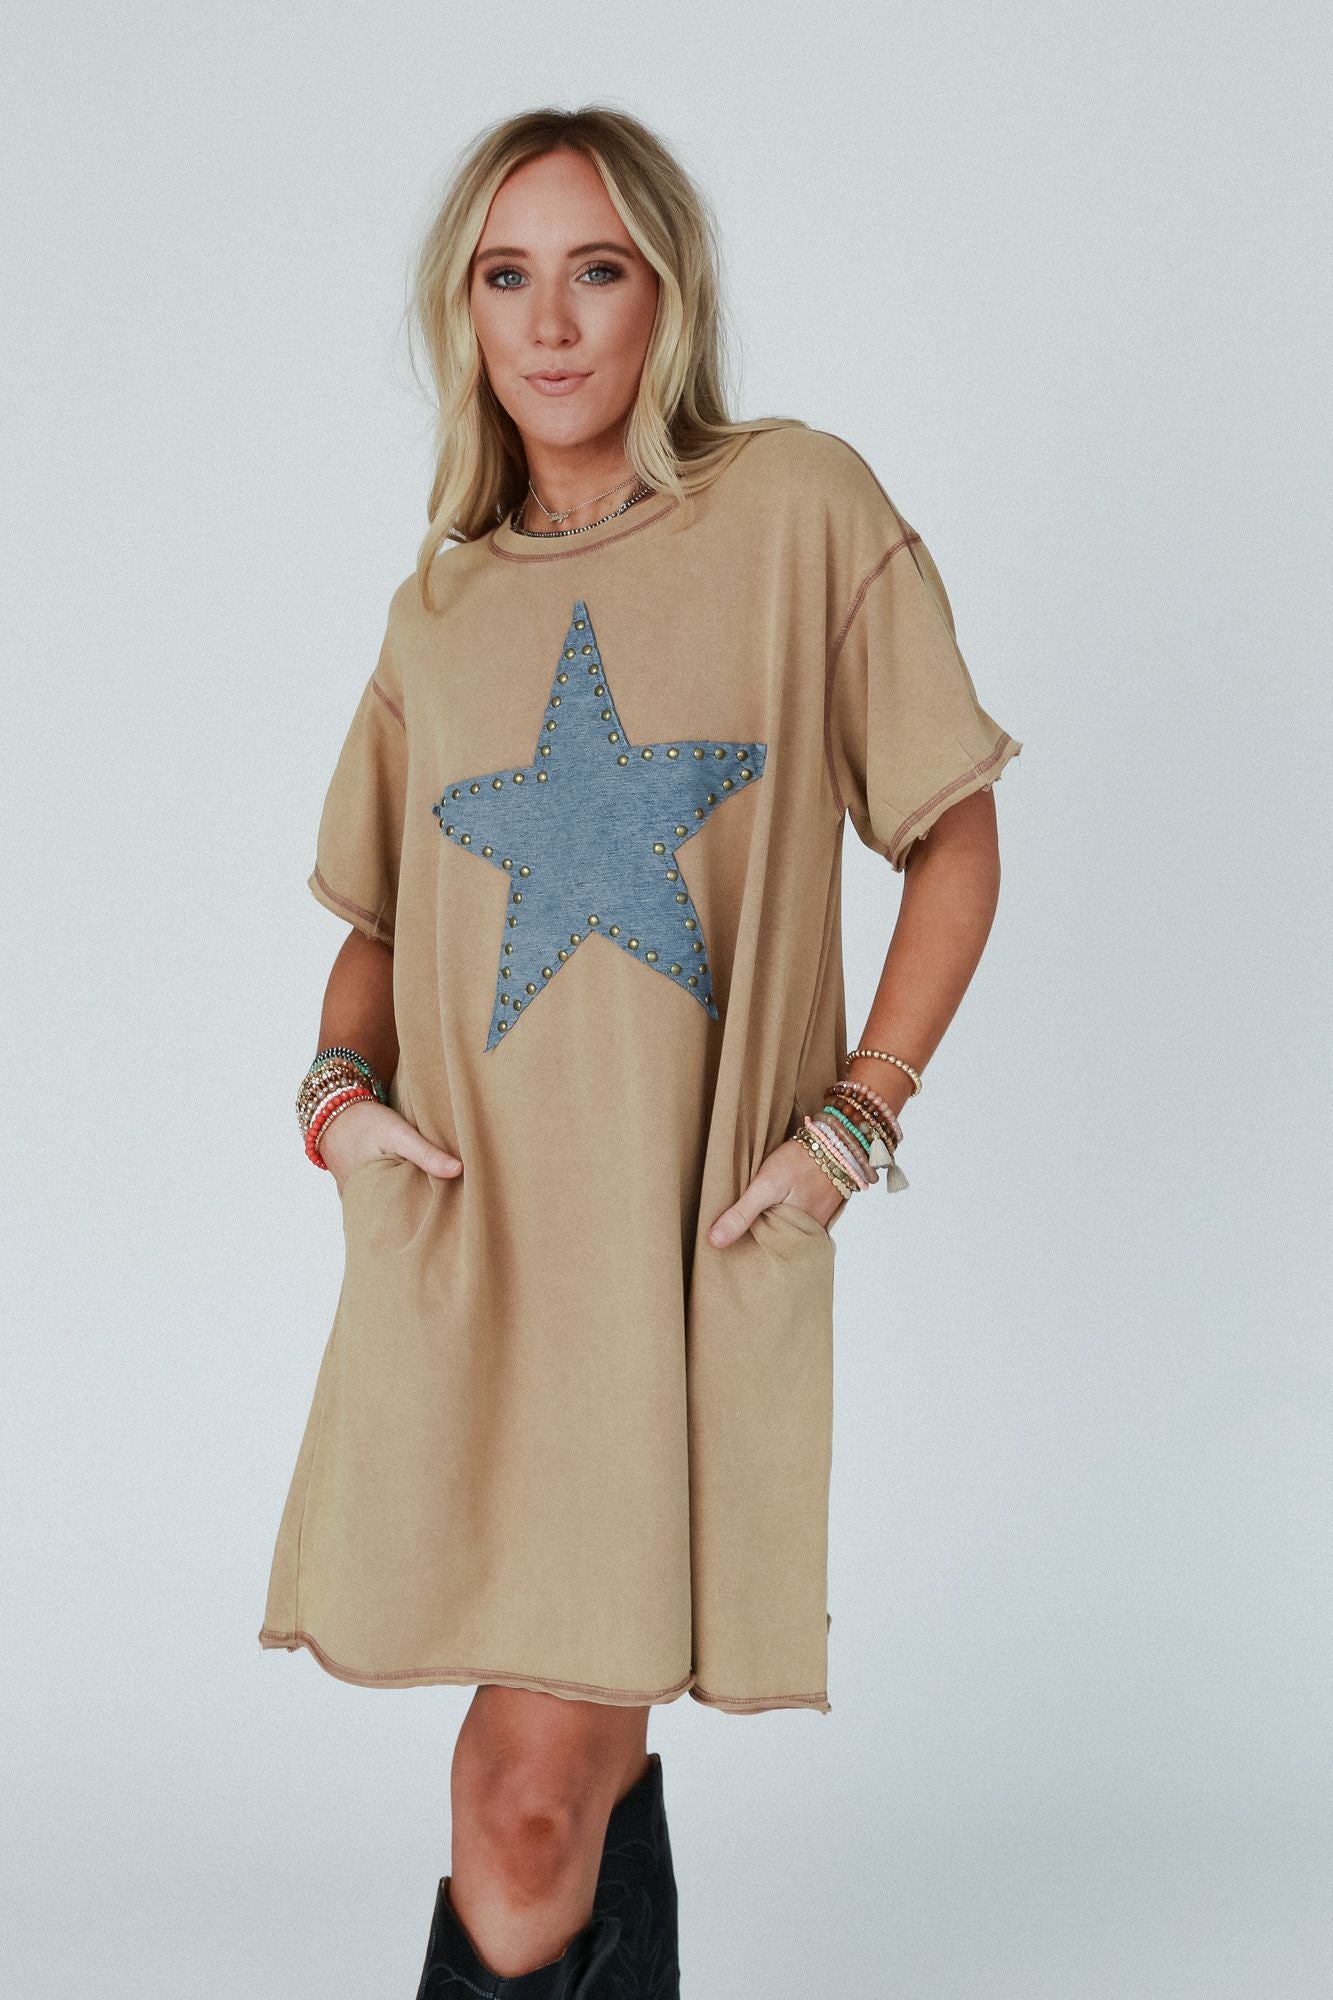 Celestial Star Patch Tee Dress - Latte